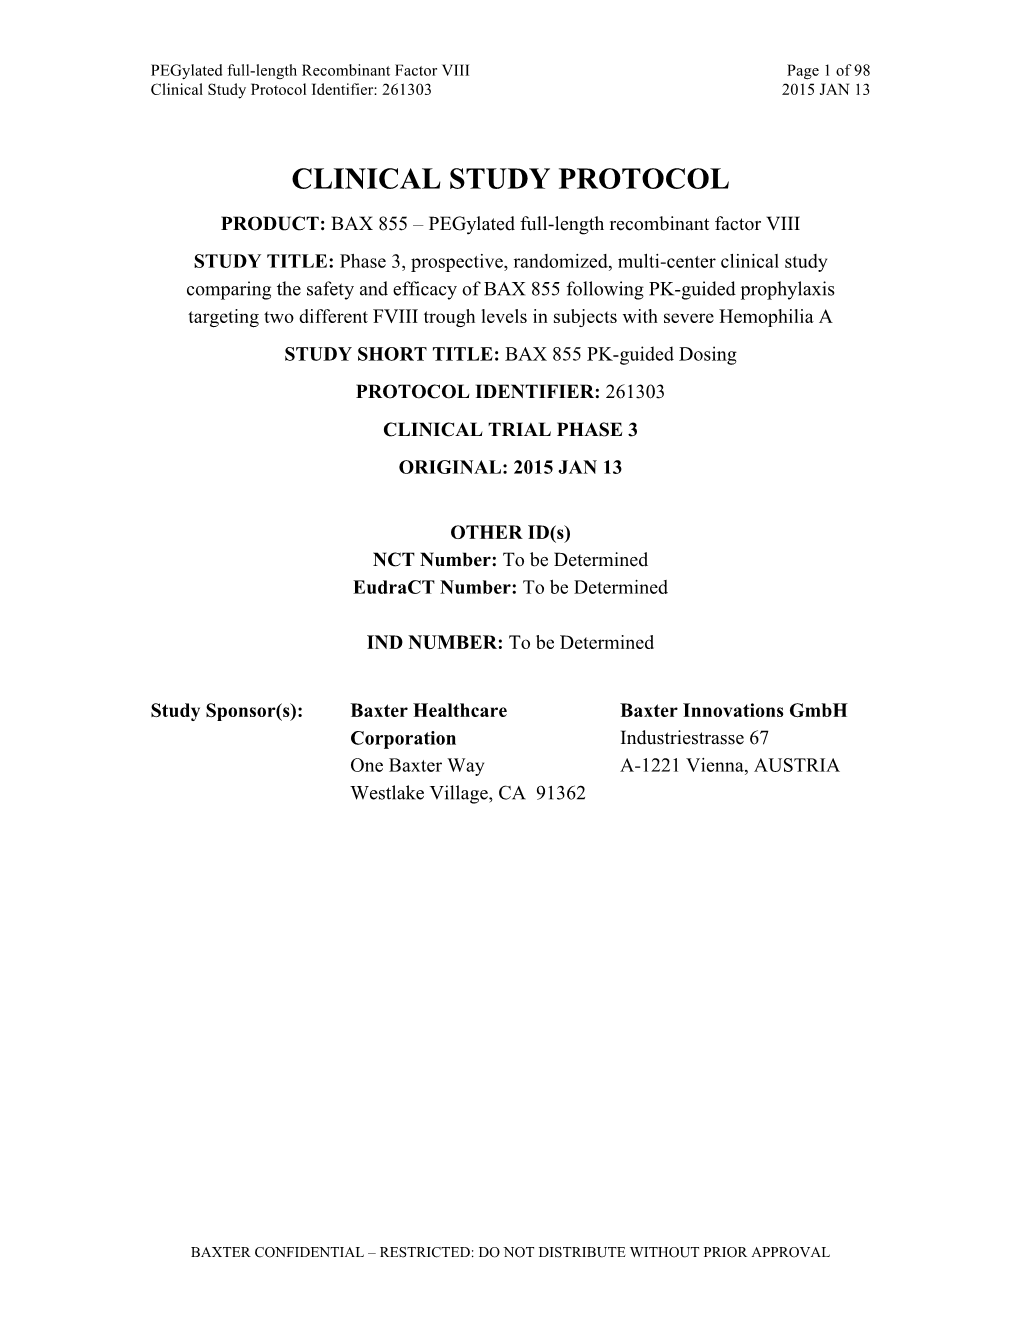 Clinical Study Protocol Identifier: 261303 2015 JAN 13